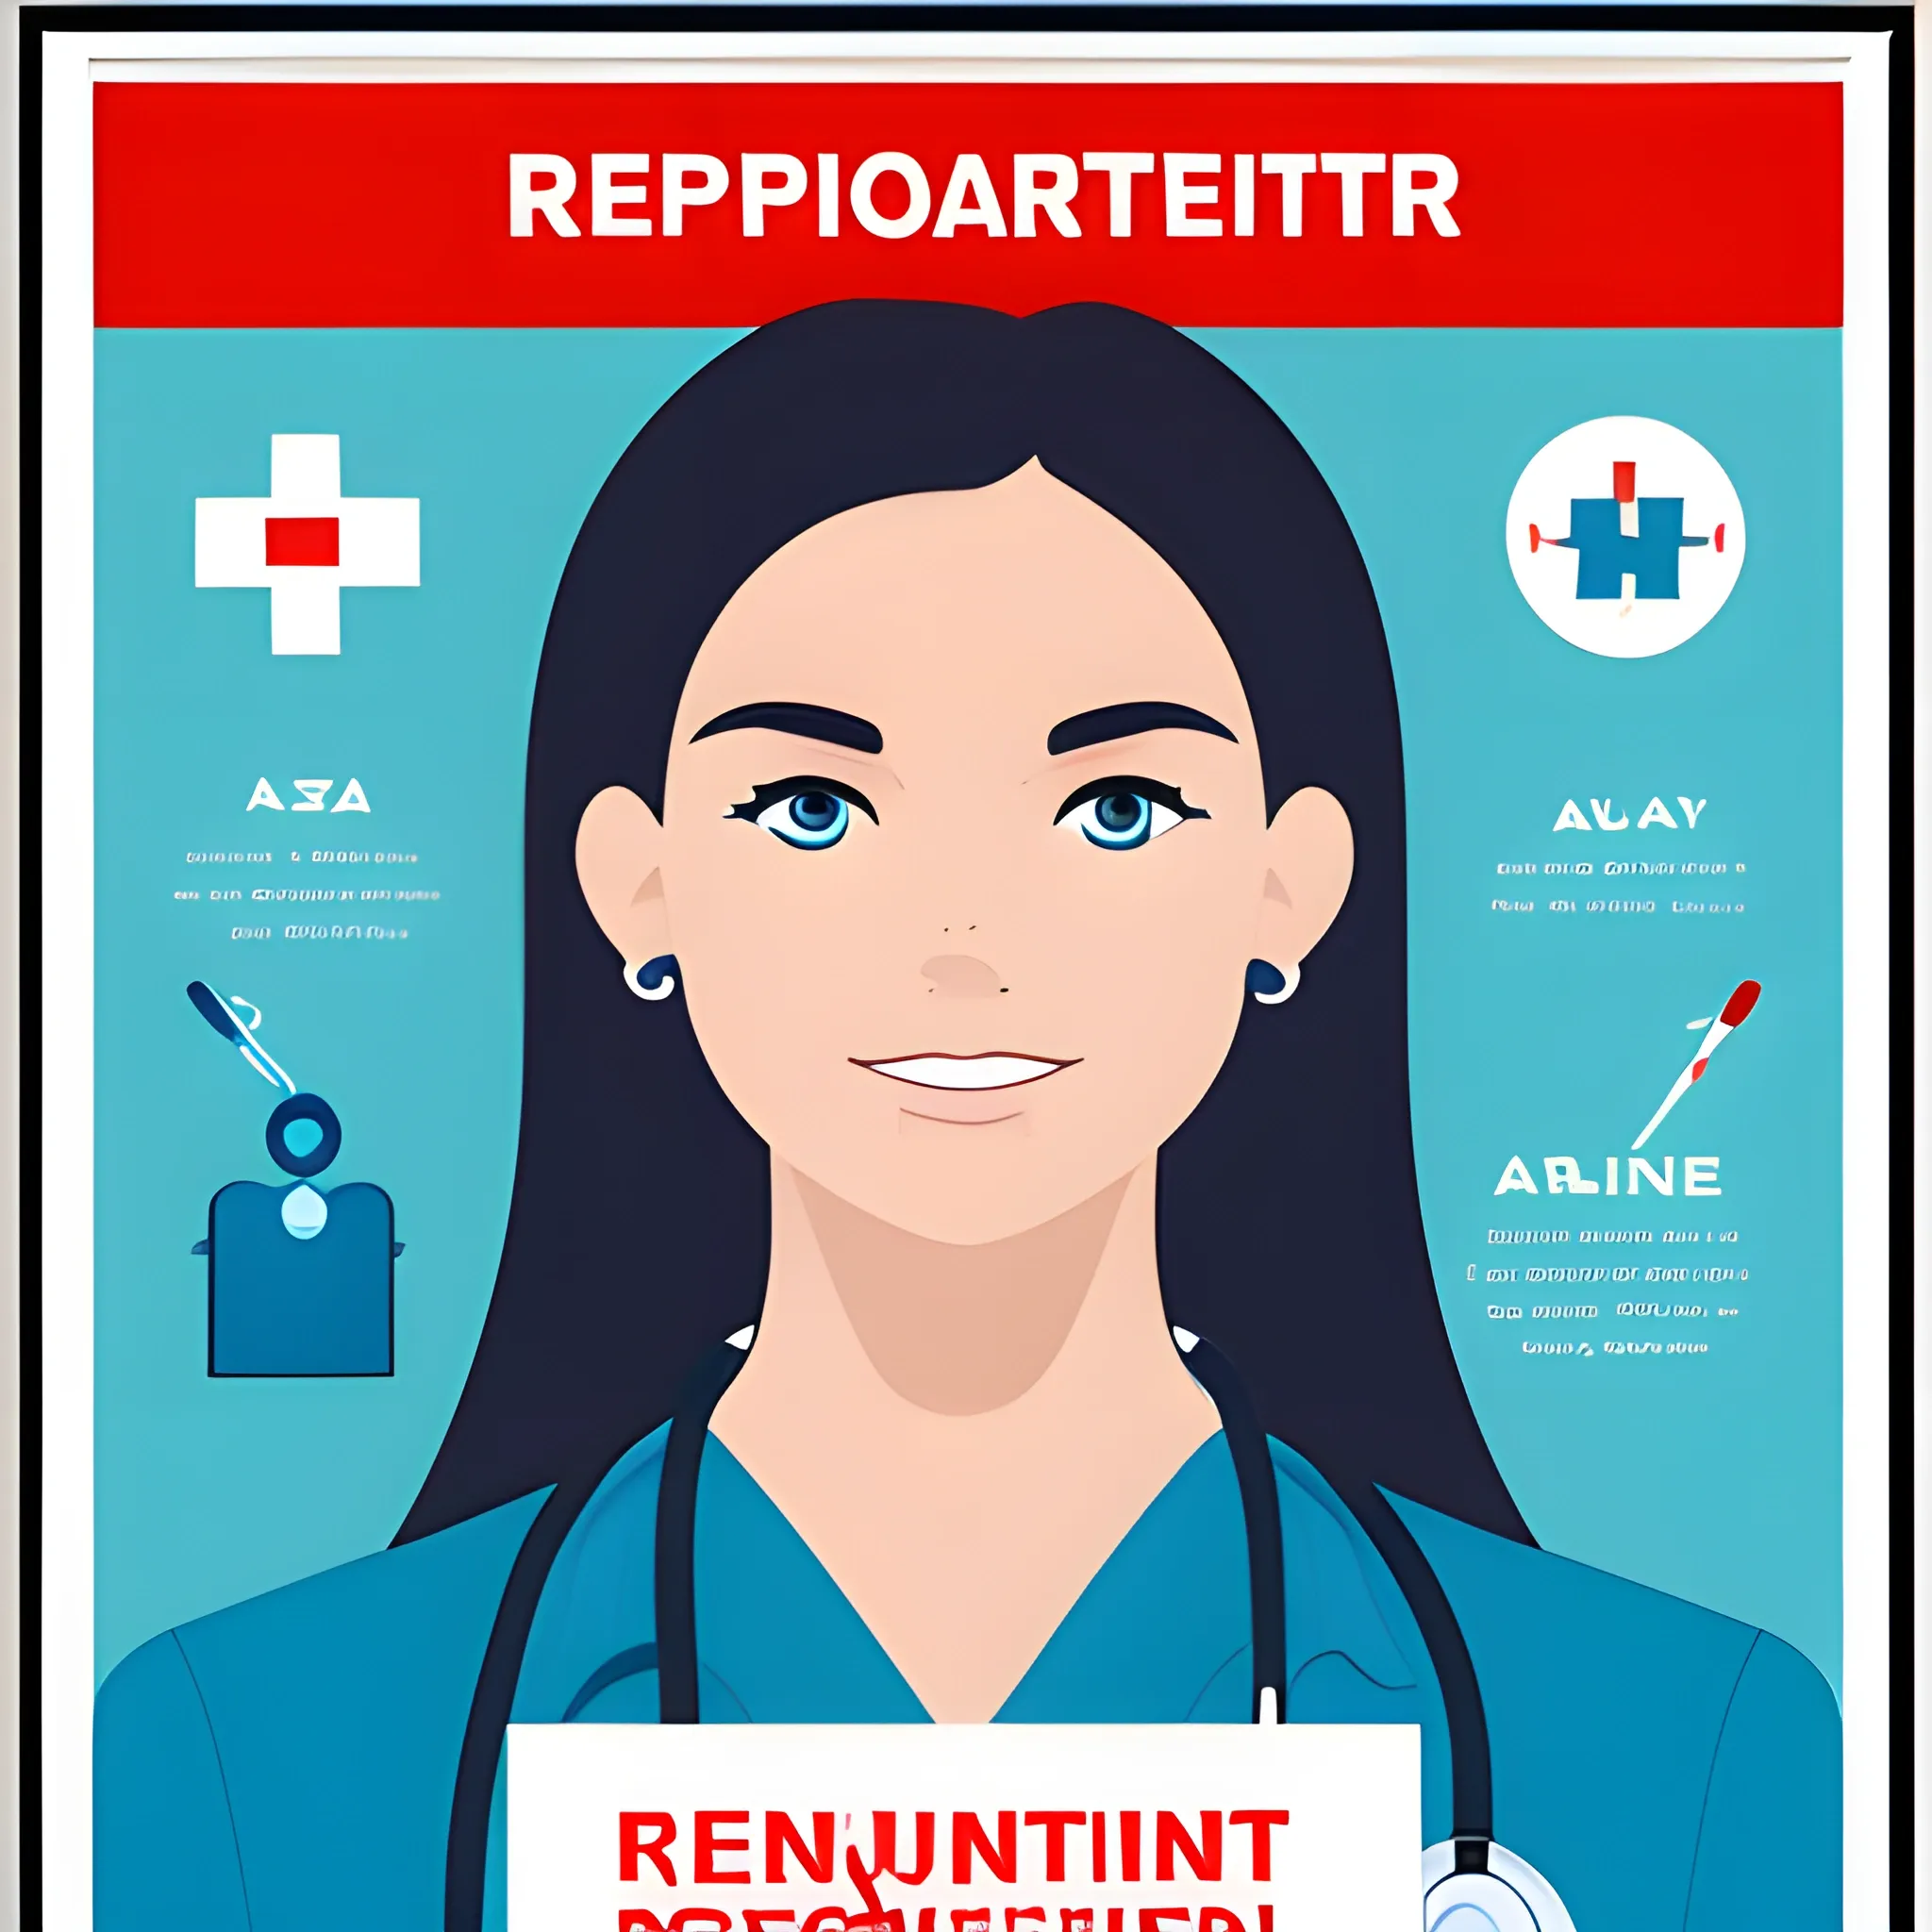 Recruitment poster，Nursing science popularization，Medical science popularization，Computer talent recruitment